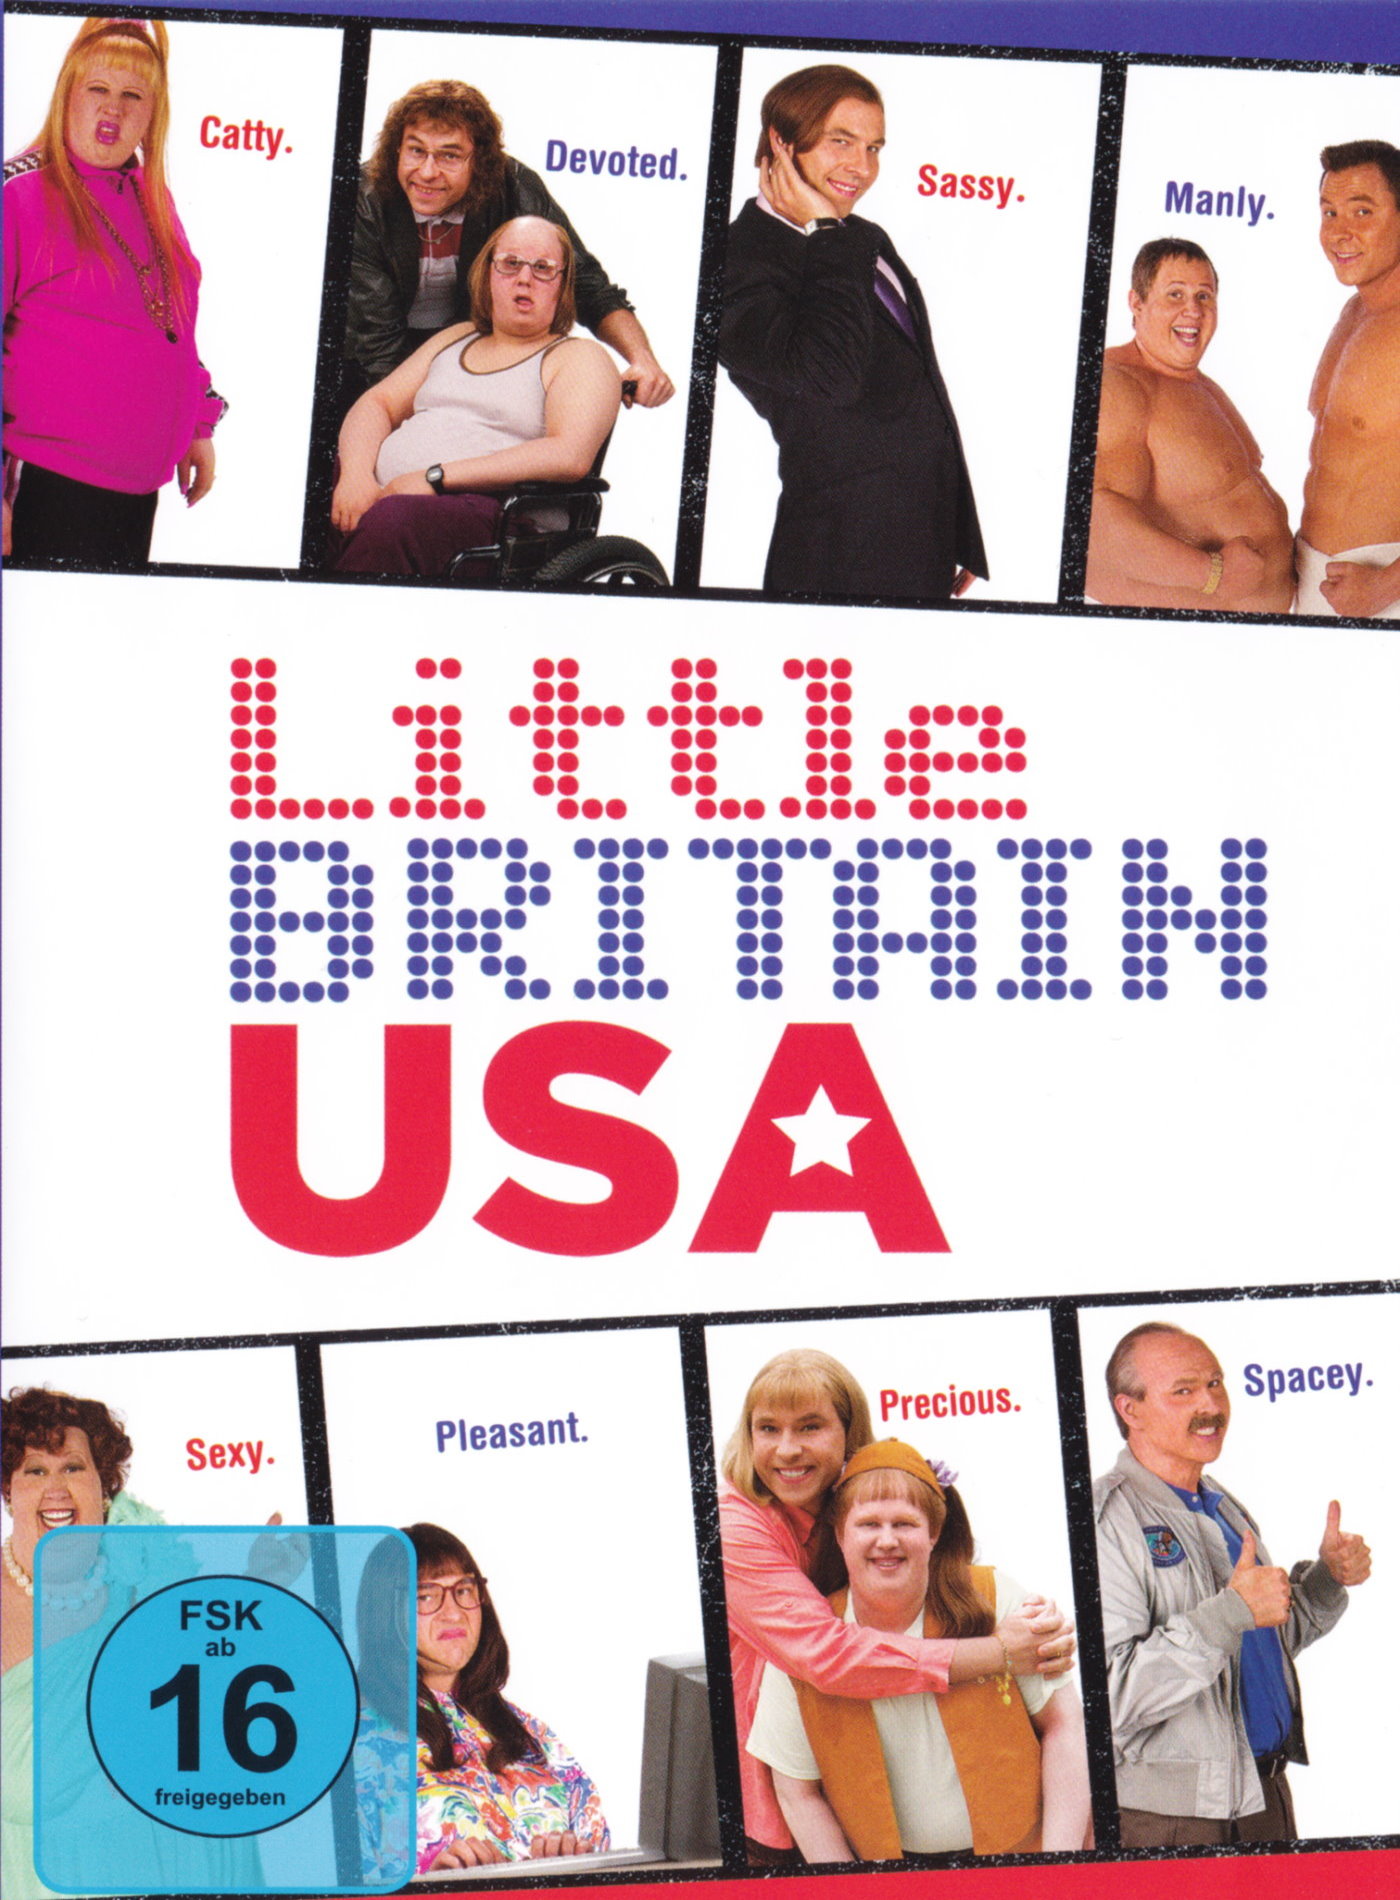 Cover - Little Britain USA.jpg